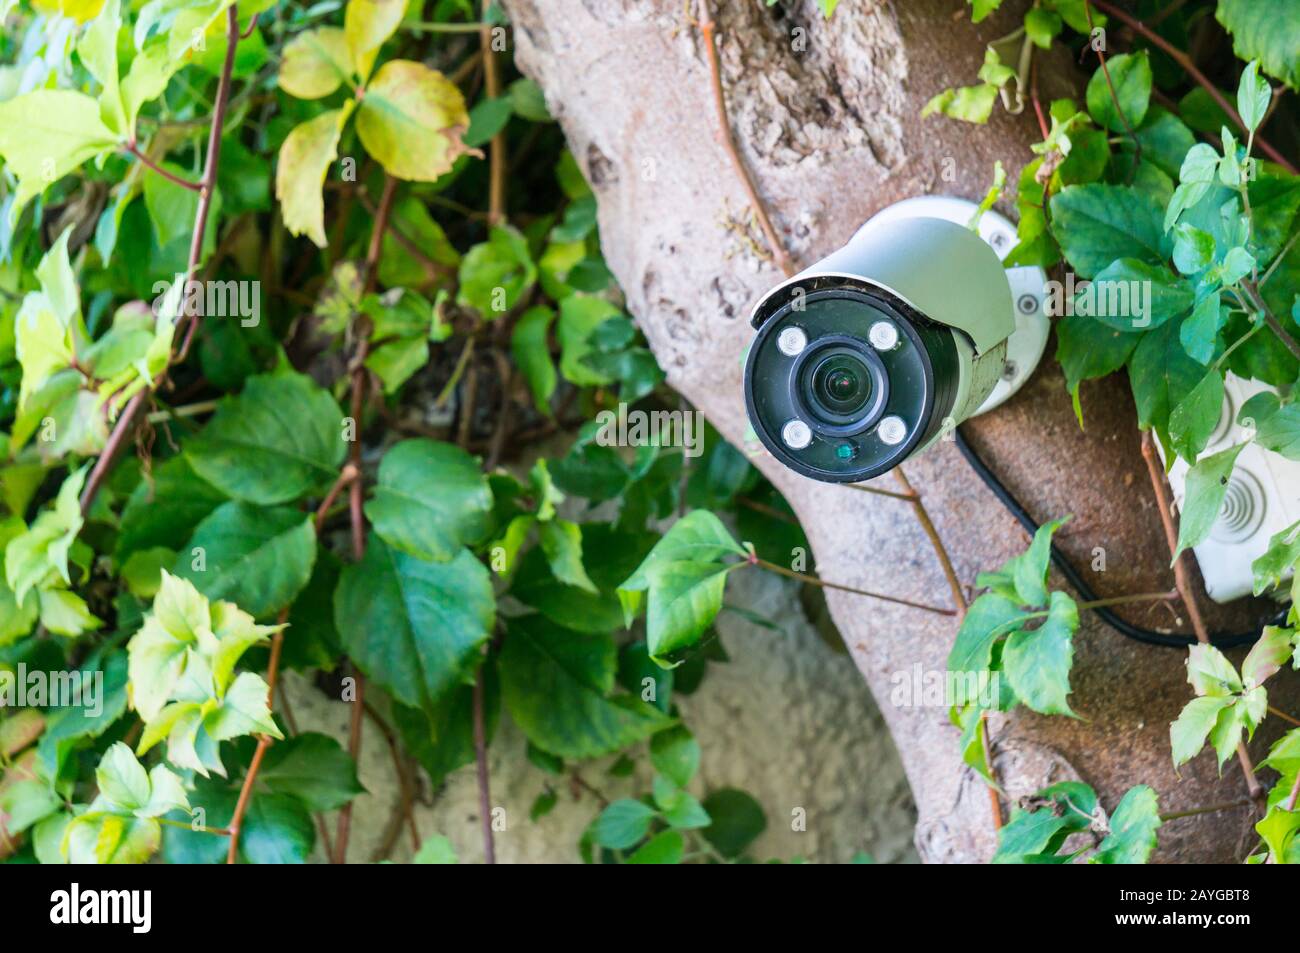 Covert video surveillance. Camera on a tree among greenery. Stock Photo